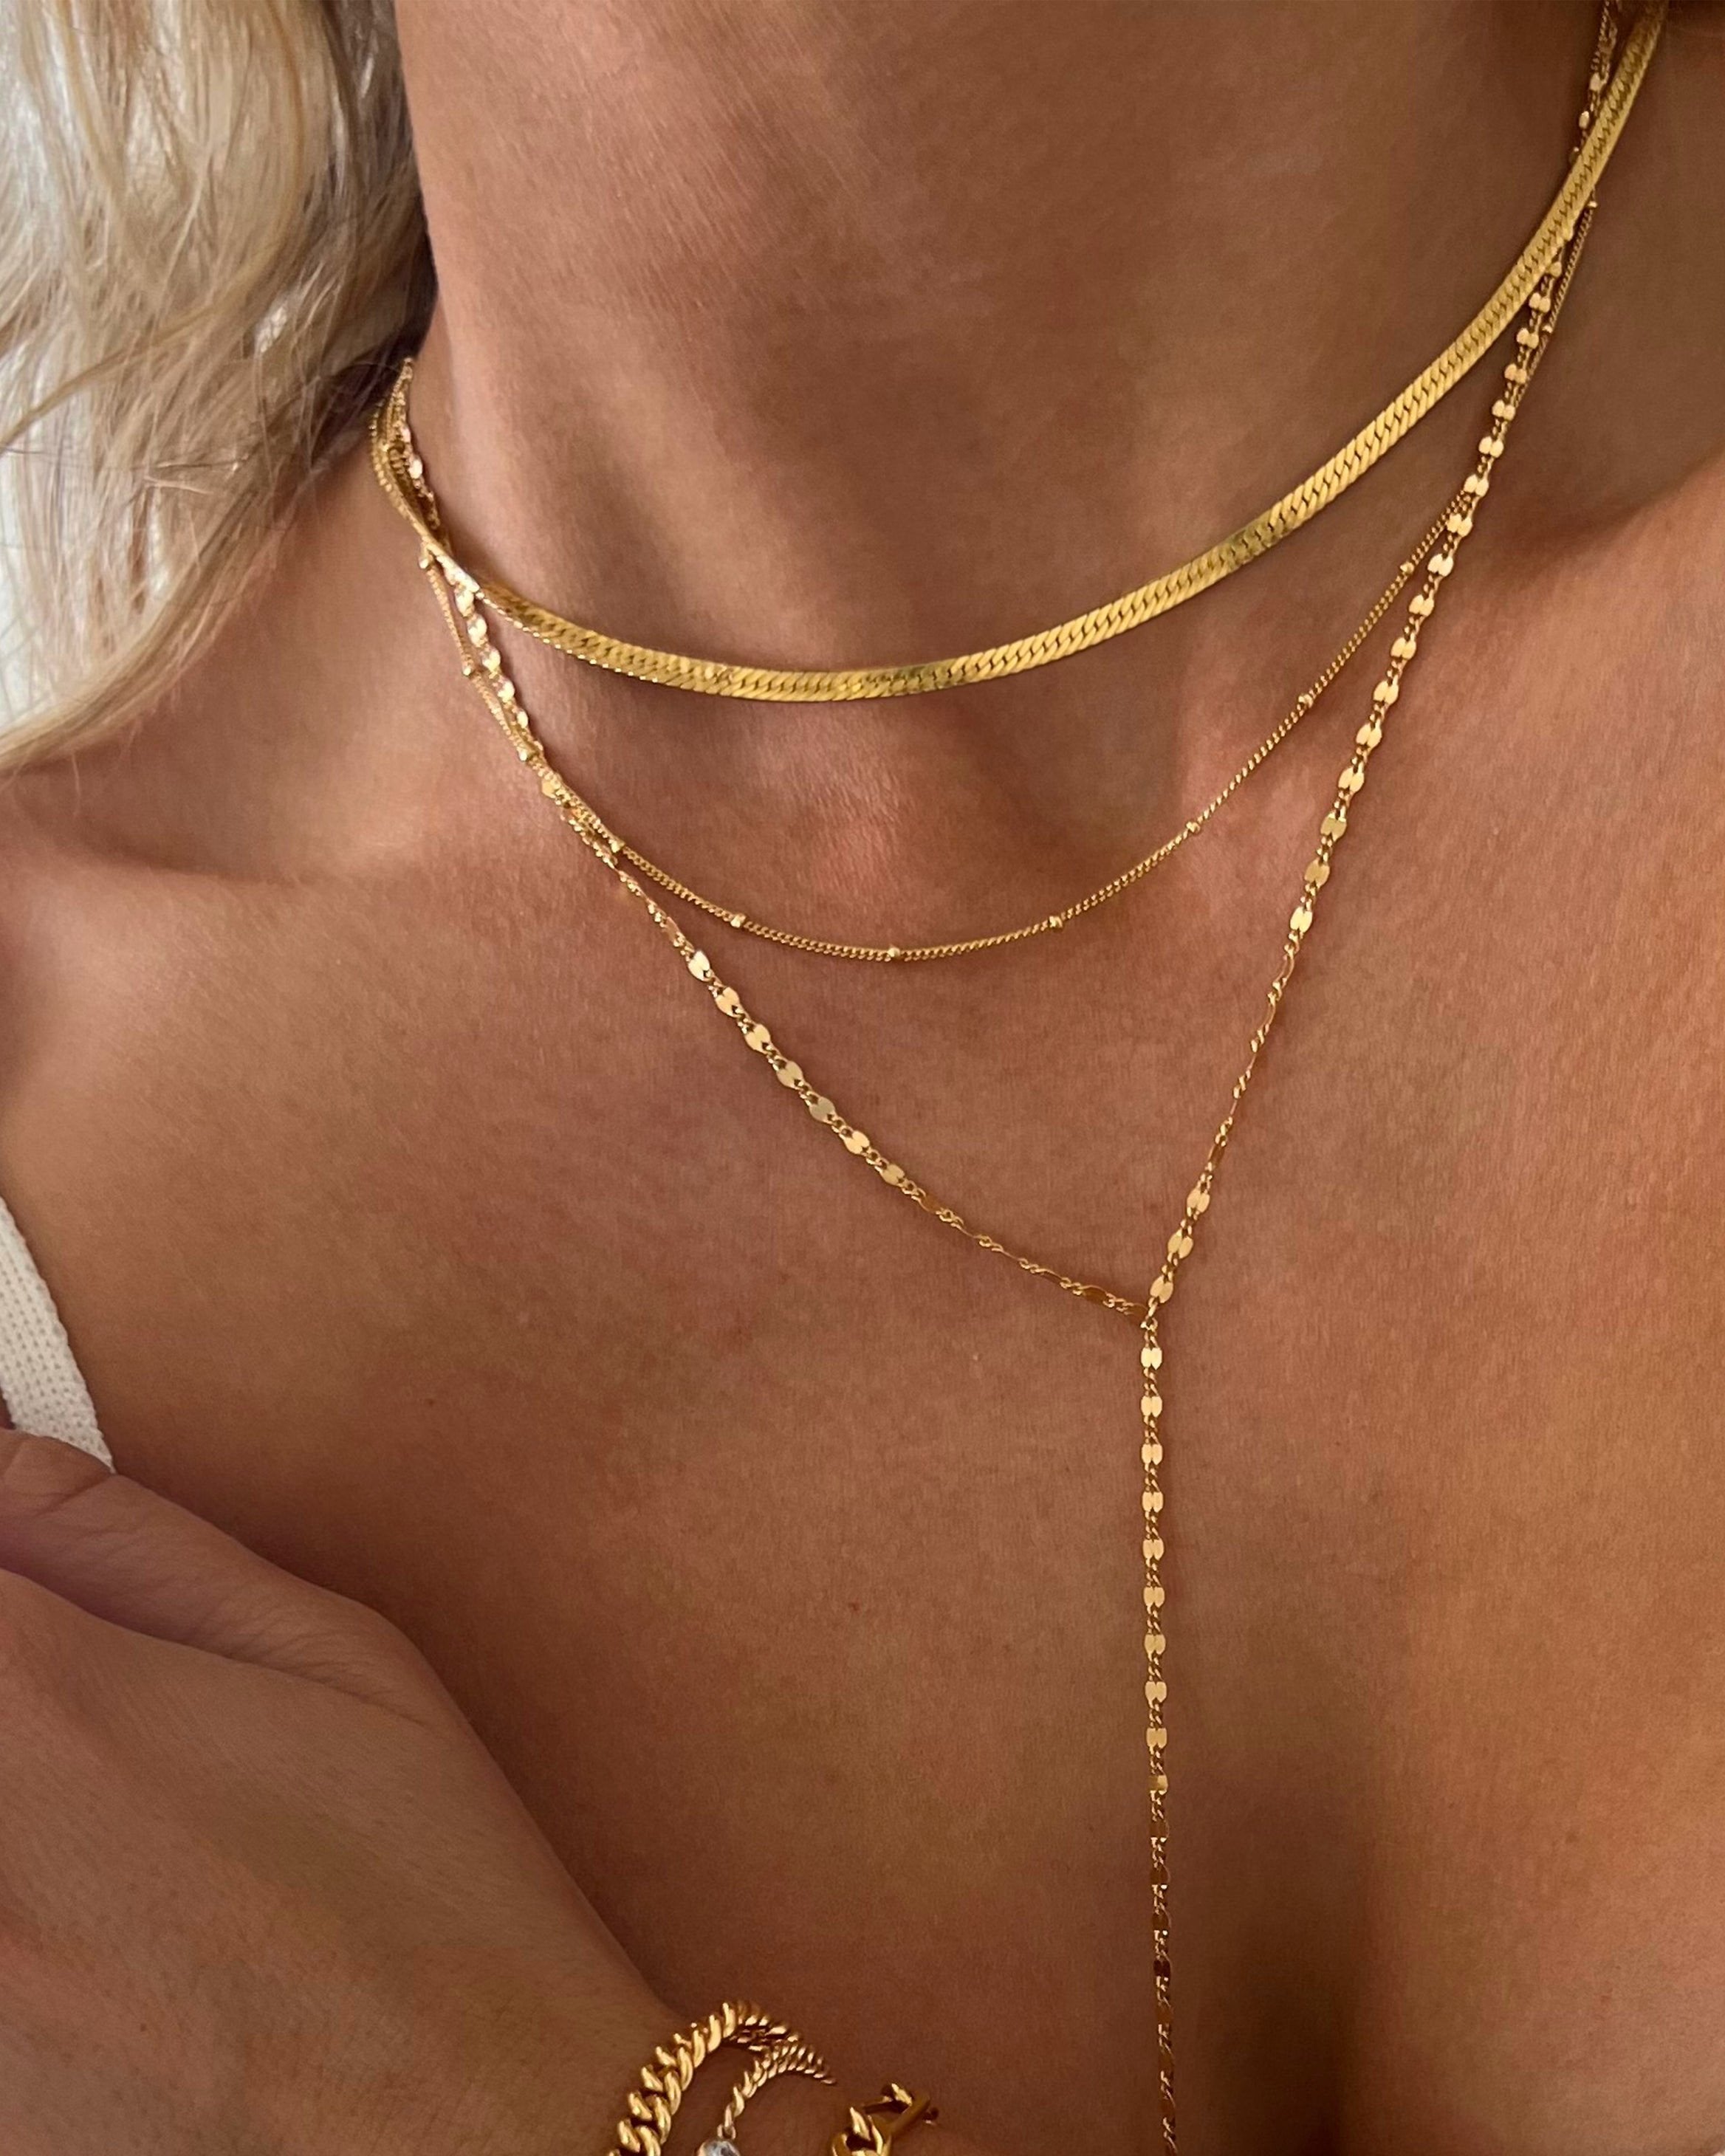 herringbone necklace, herringbone chain, gold filled herringbone chain, gold filled herringbone necklace, layering necklace, gold filled necklace, gold necklace